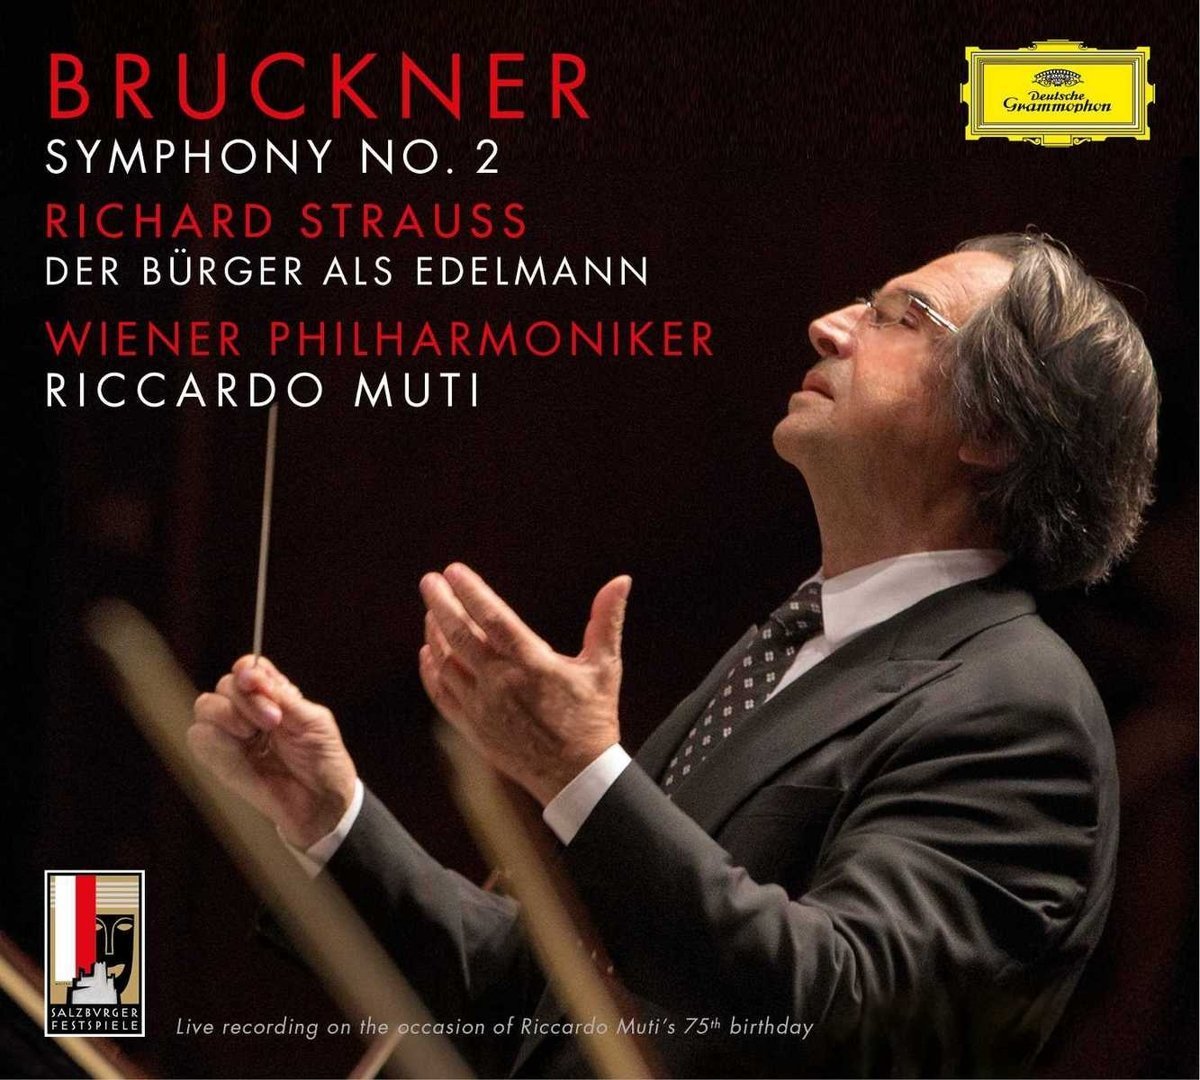 Bruckner 2 | Wiener Philharmoniker, Riccardo Muti